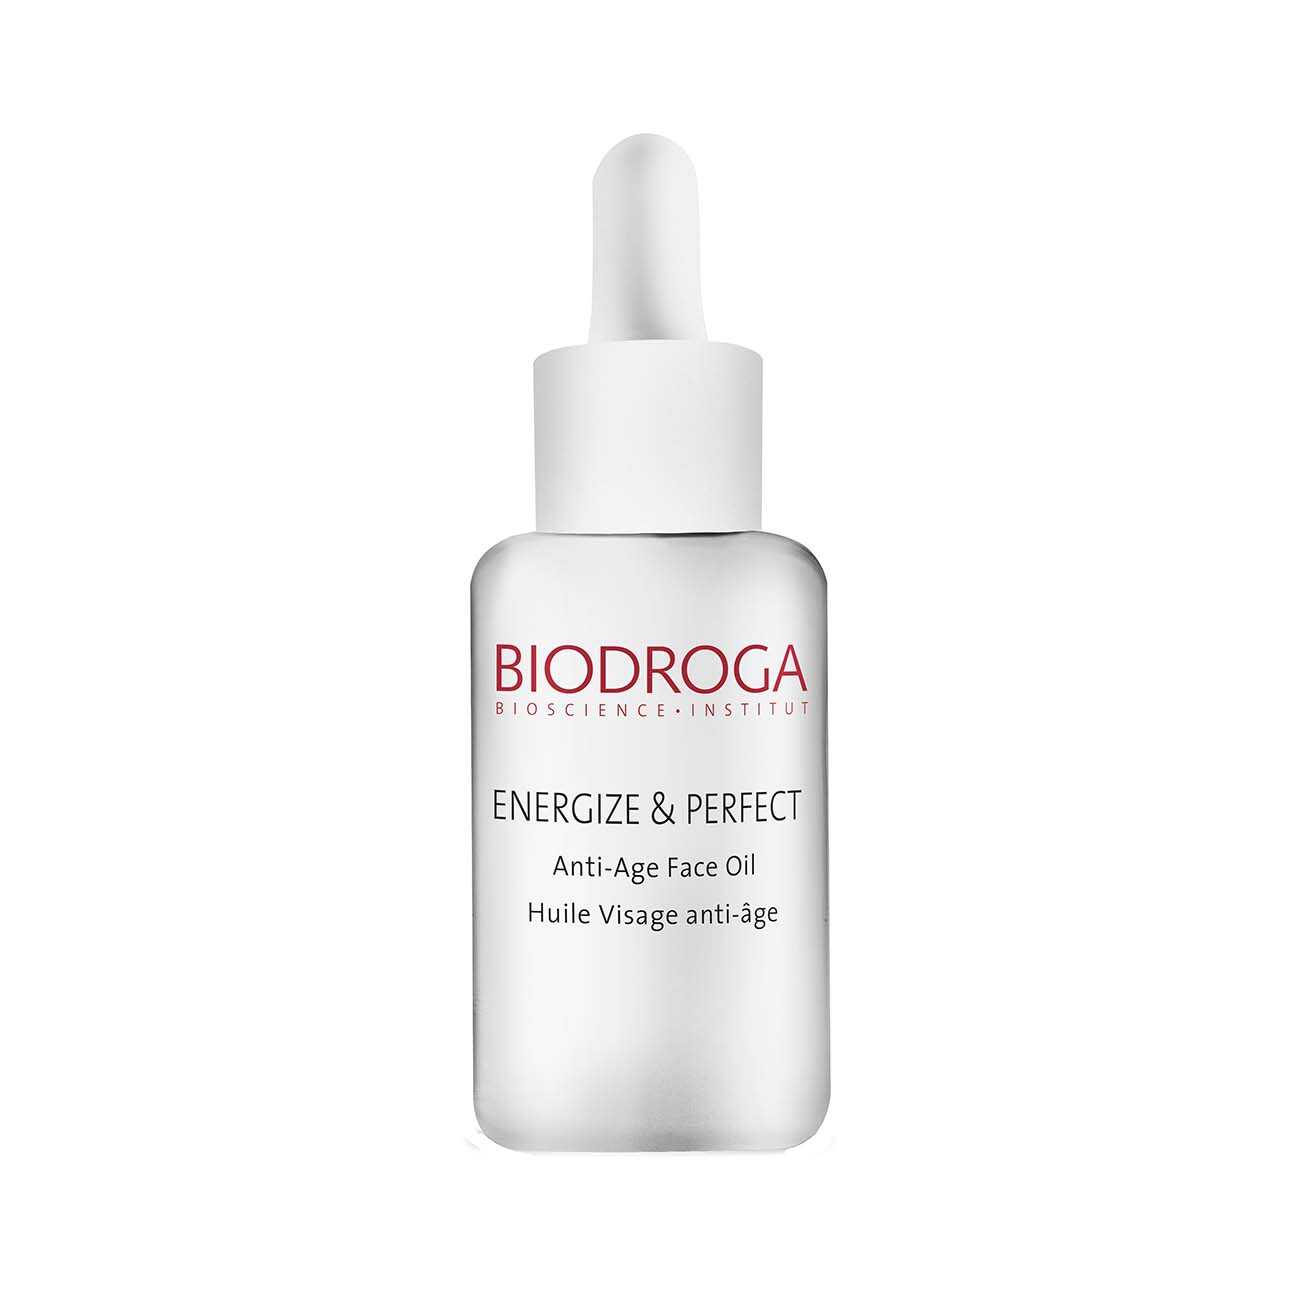 BIODROGA Energize & Perfect Anti-Age Face Oil